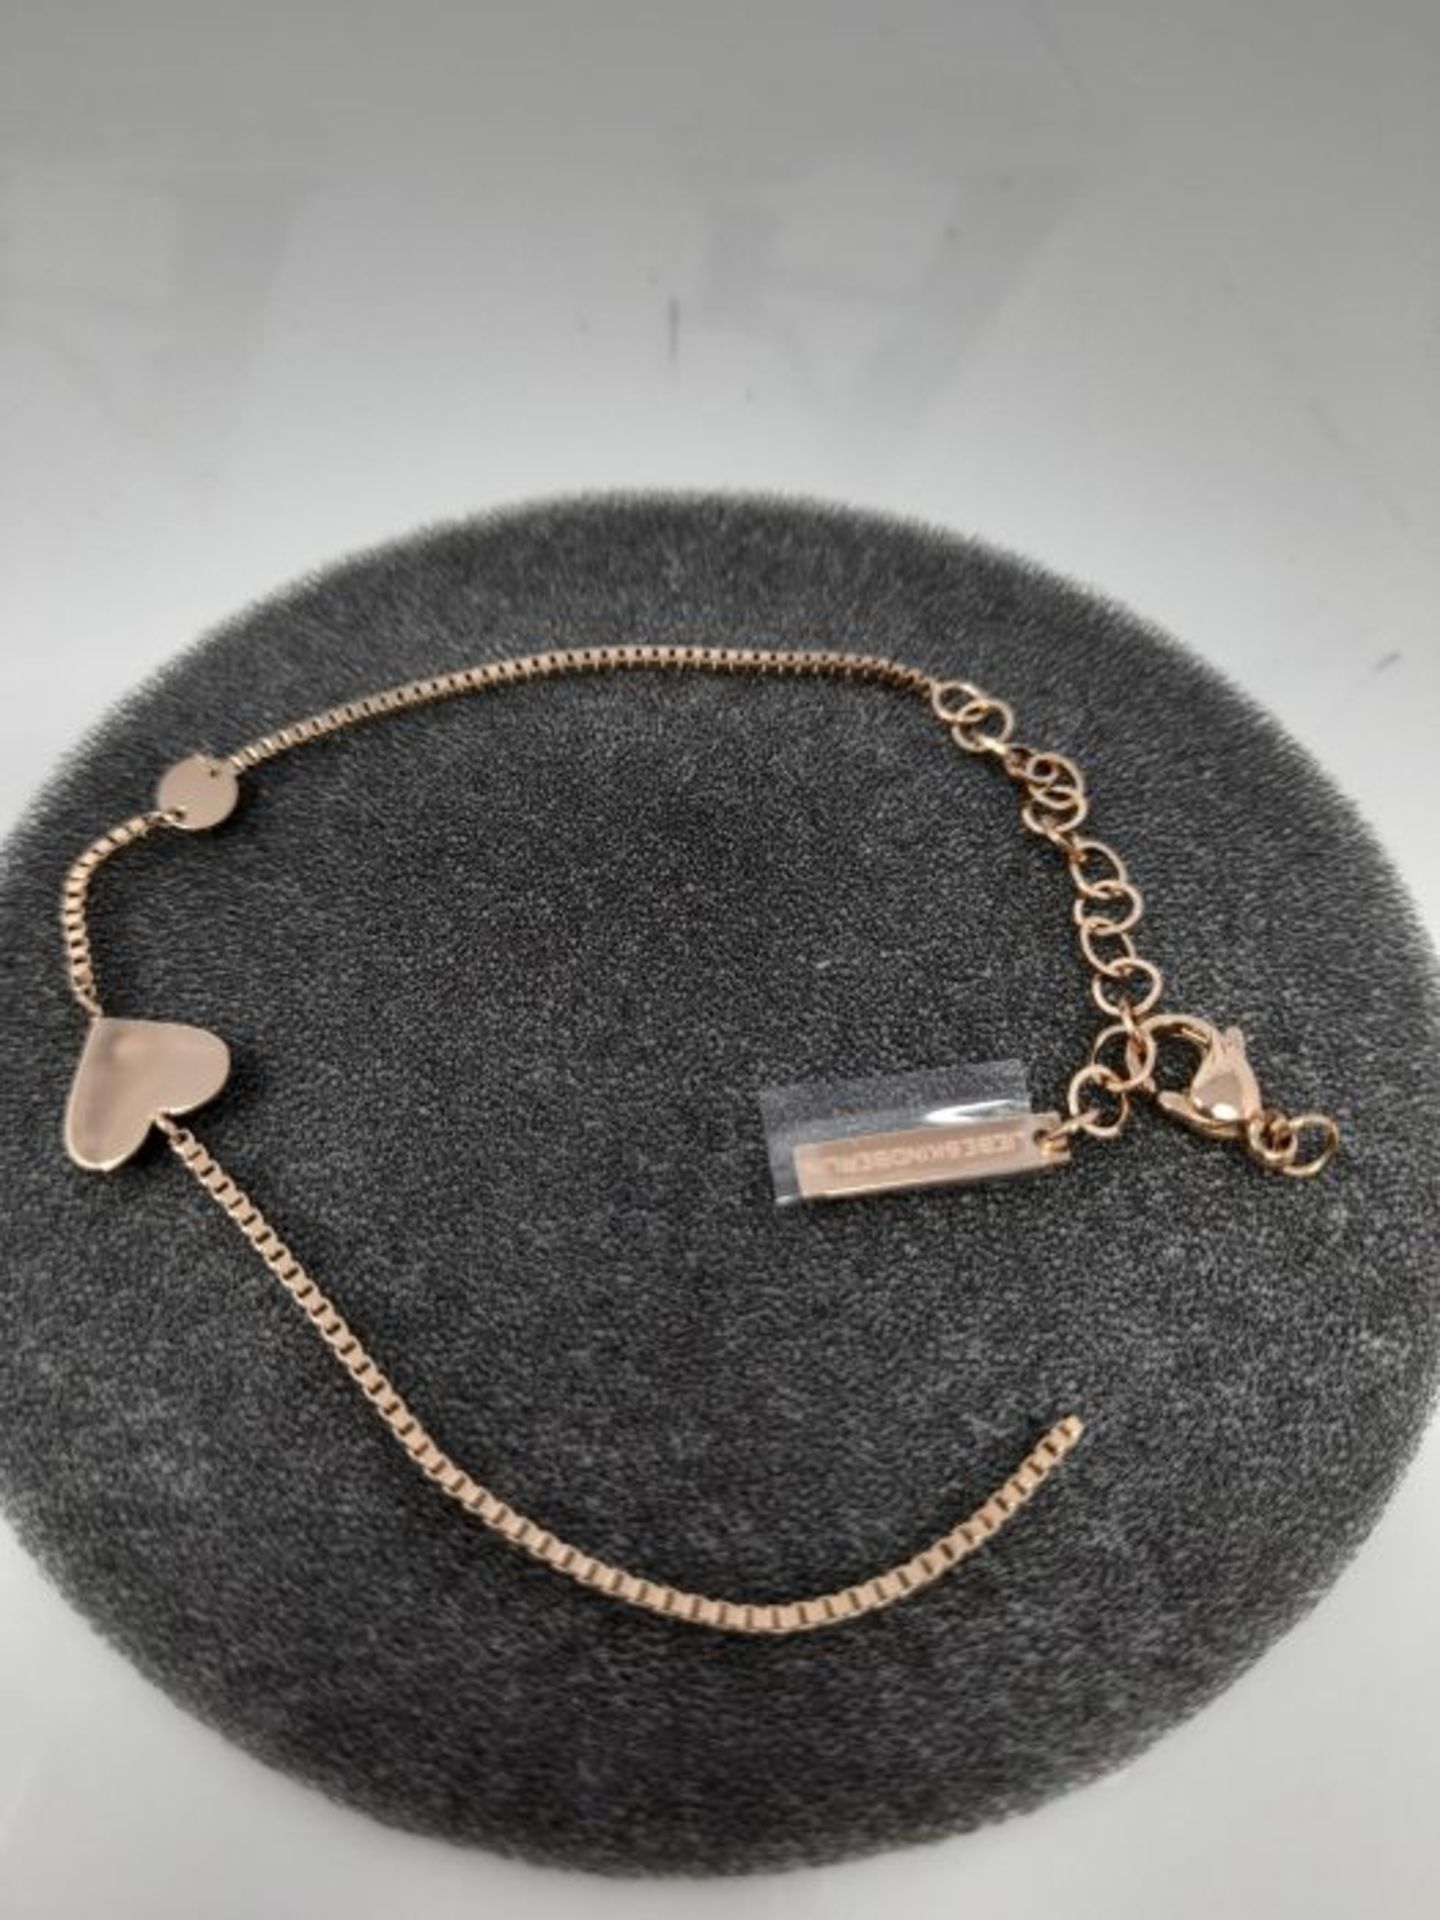 [CRACKED] Liebeskind Berlin Bracelet, 20 centimeters, Stainless Steel, 0, - Image 3 of 3